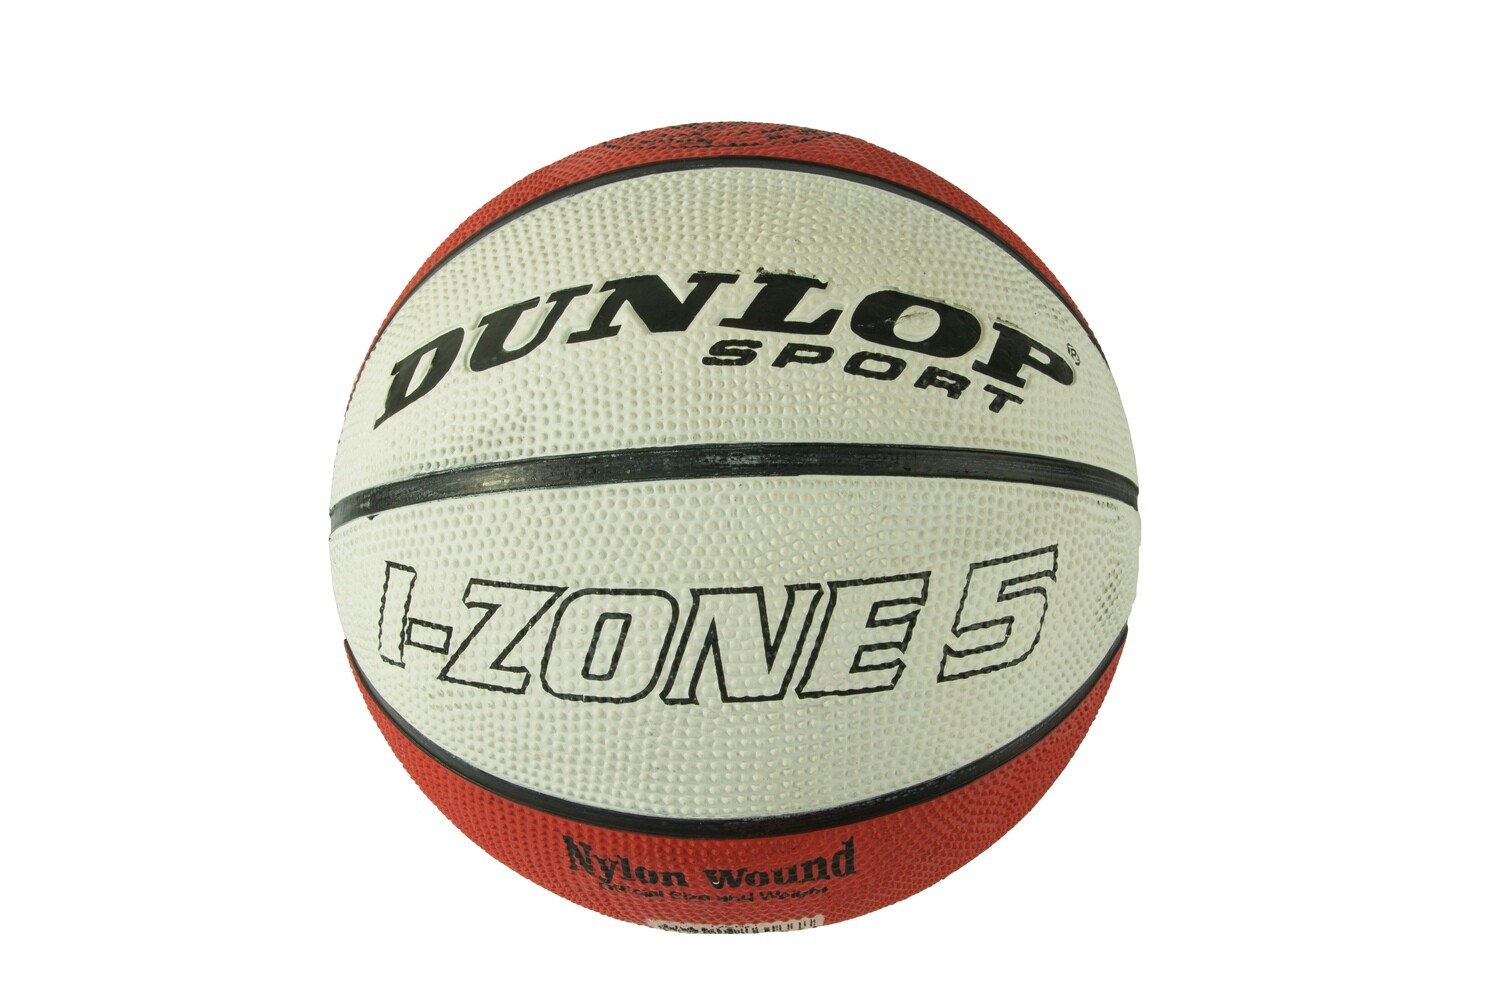 Dunlop Basketball I-Zone 5 (Junior)